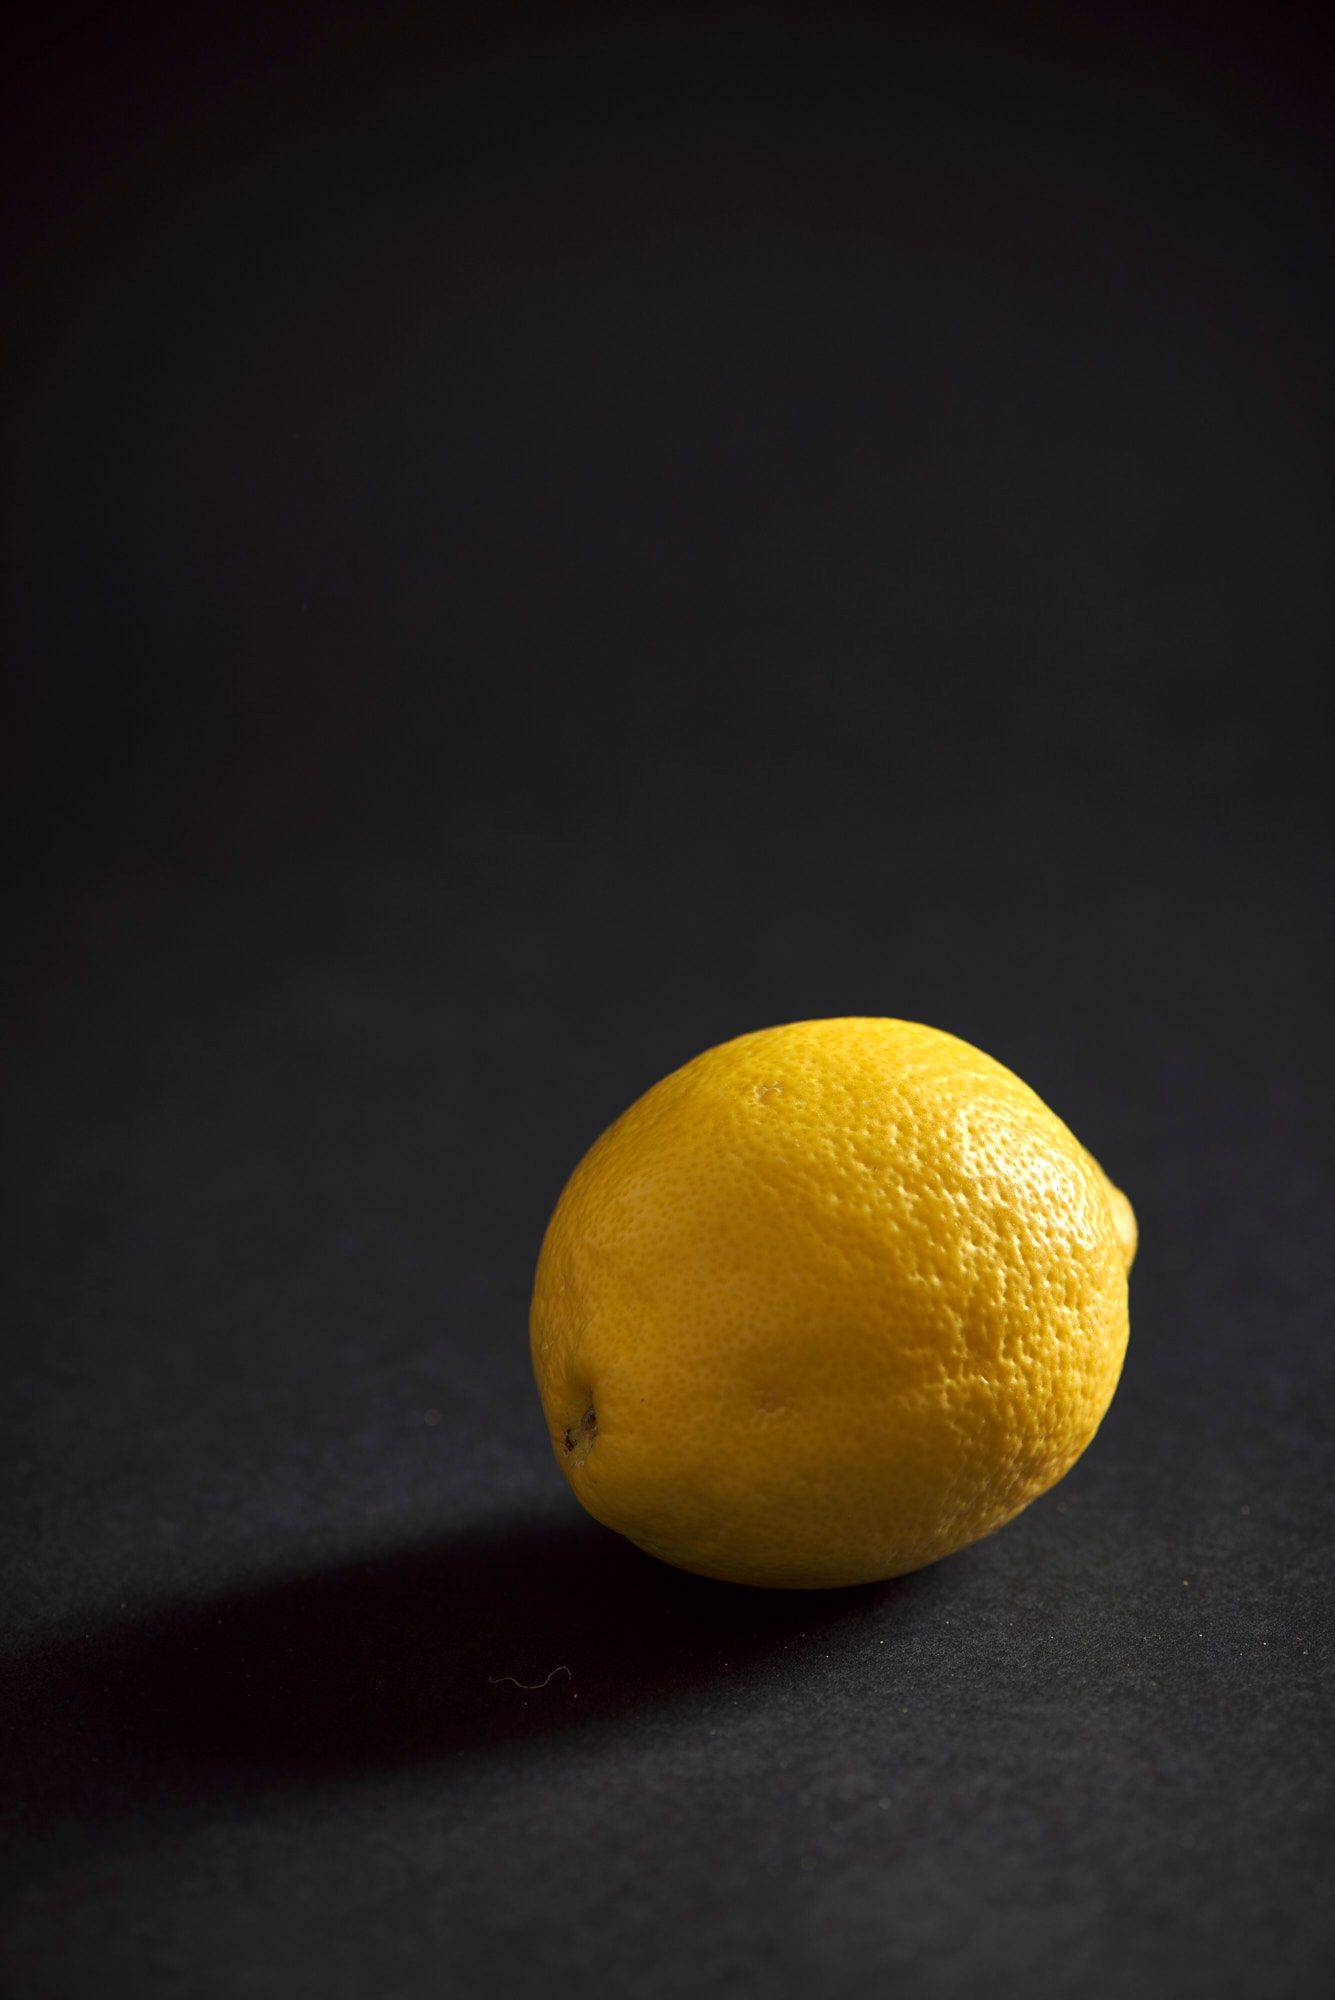 a lemon on black background